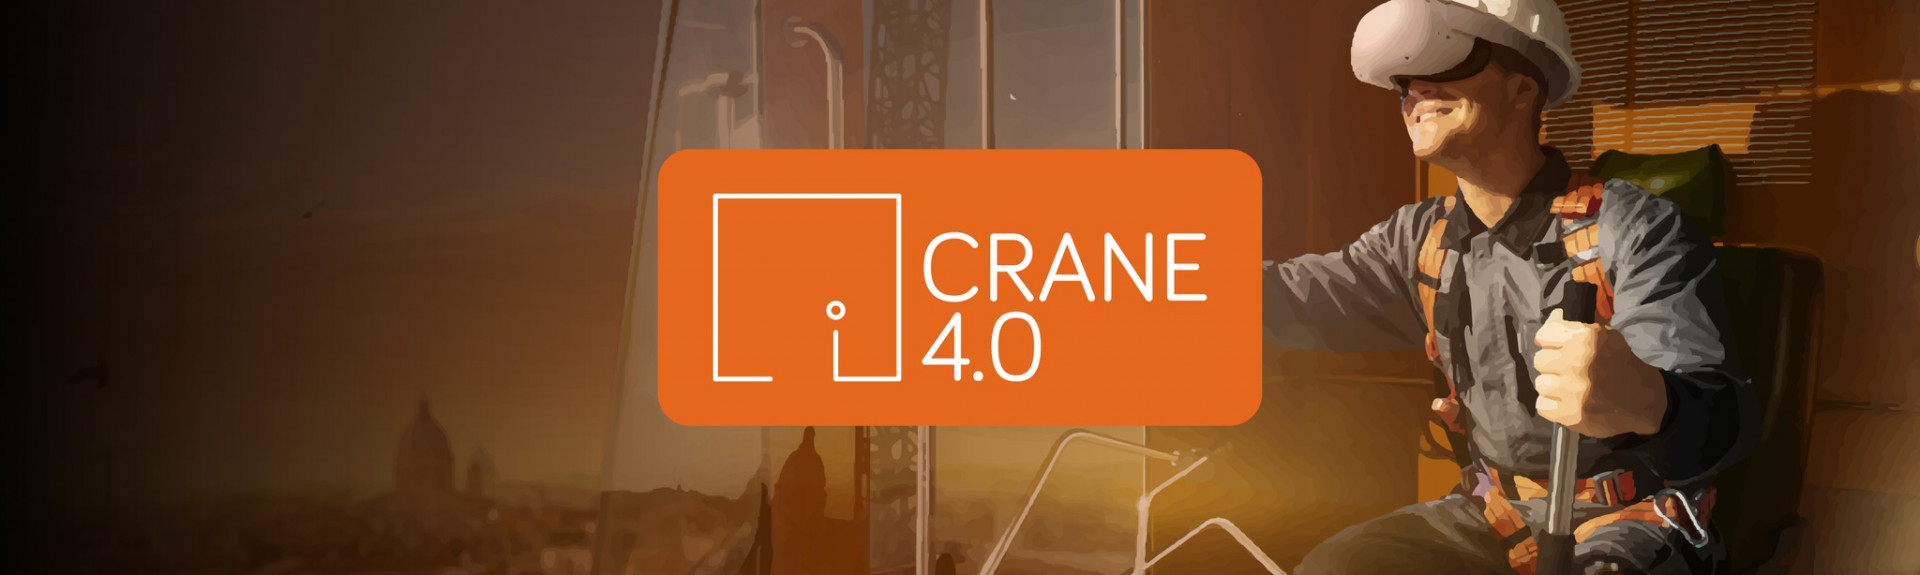 CRANES 4.0: VR for training